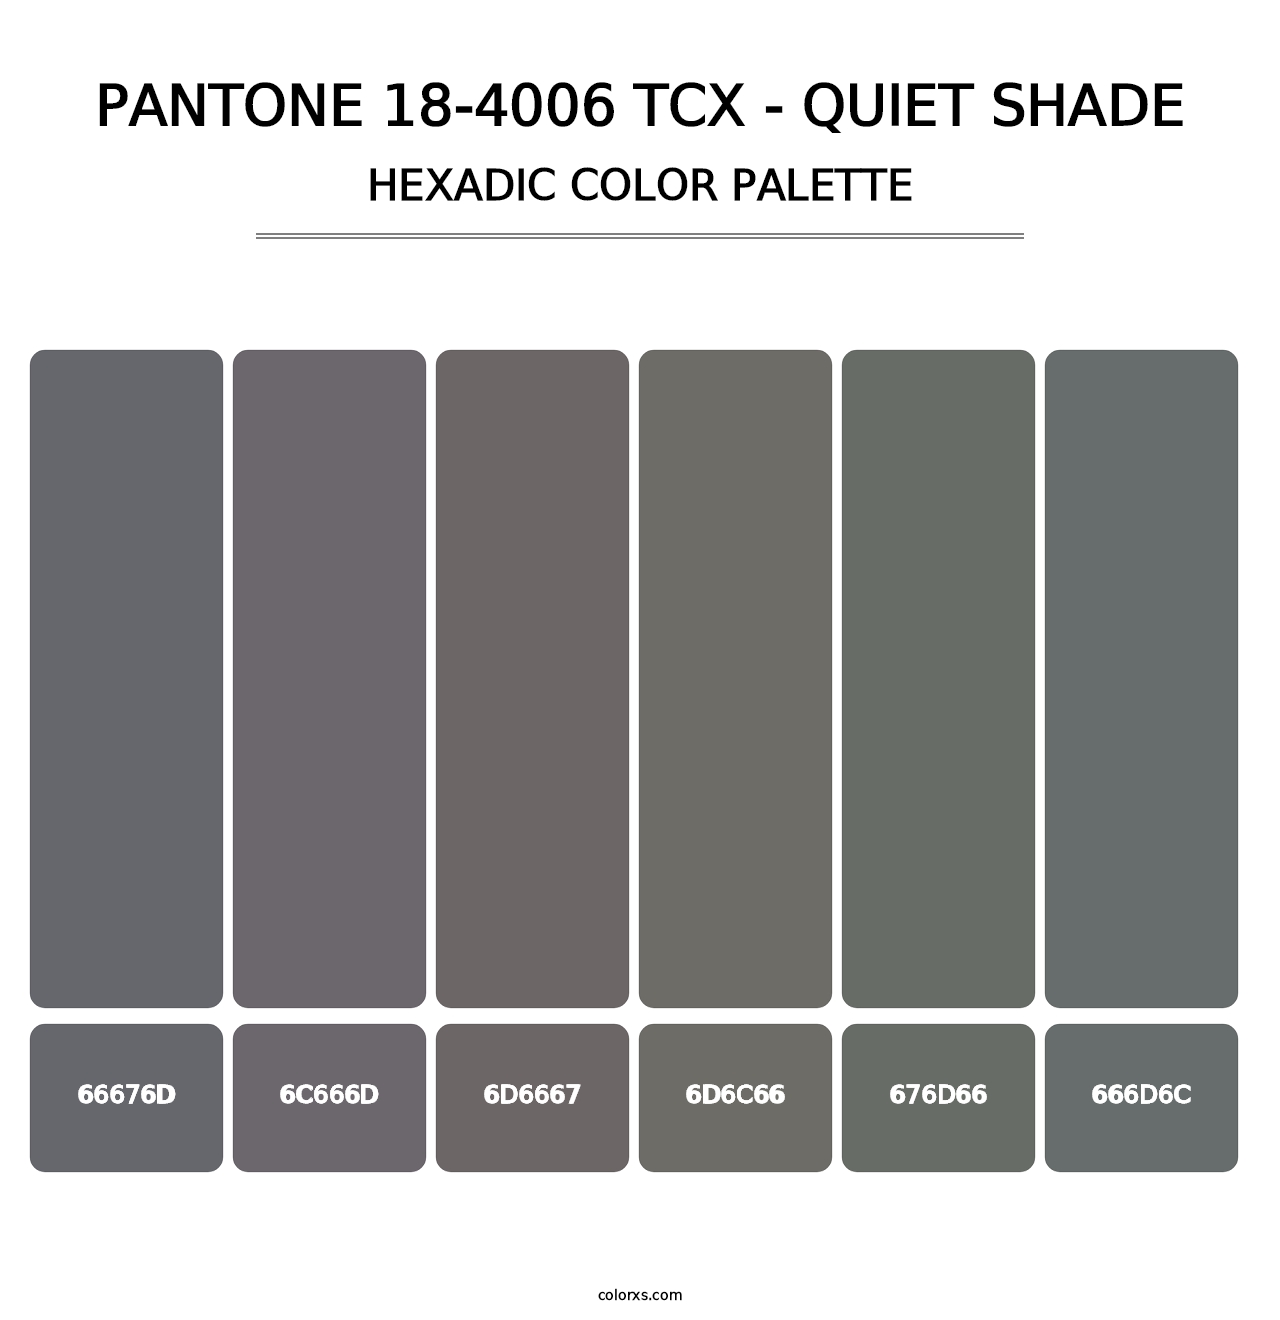 PANTONE 18-4006 TCX - Quiet Shade - Hexadic Color Palette